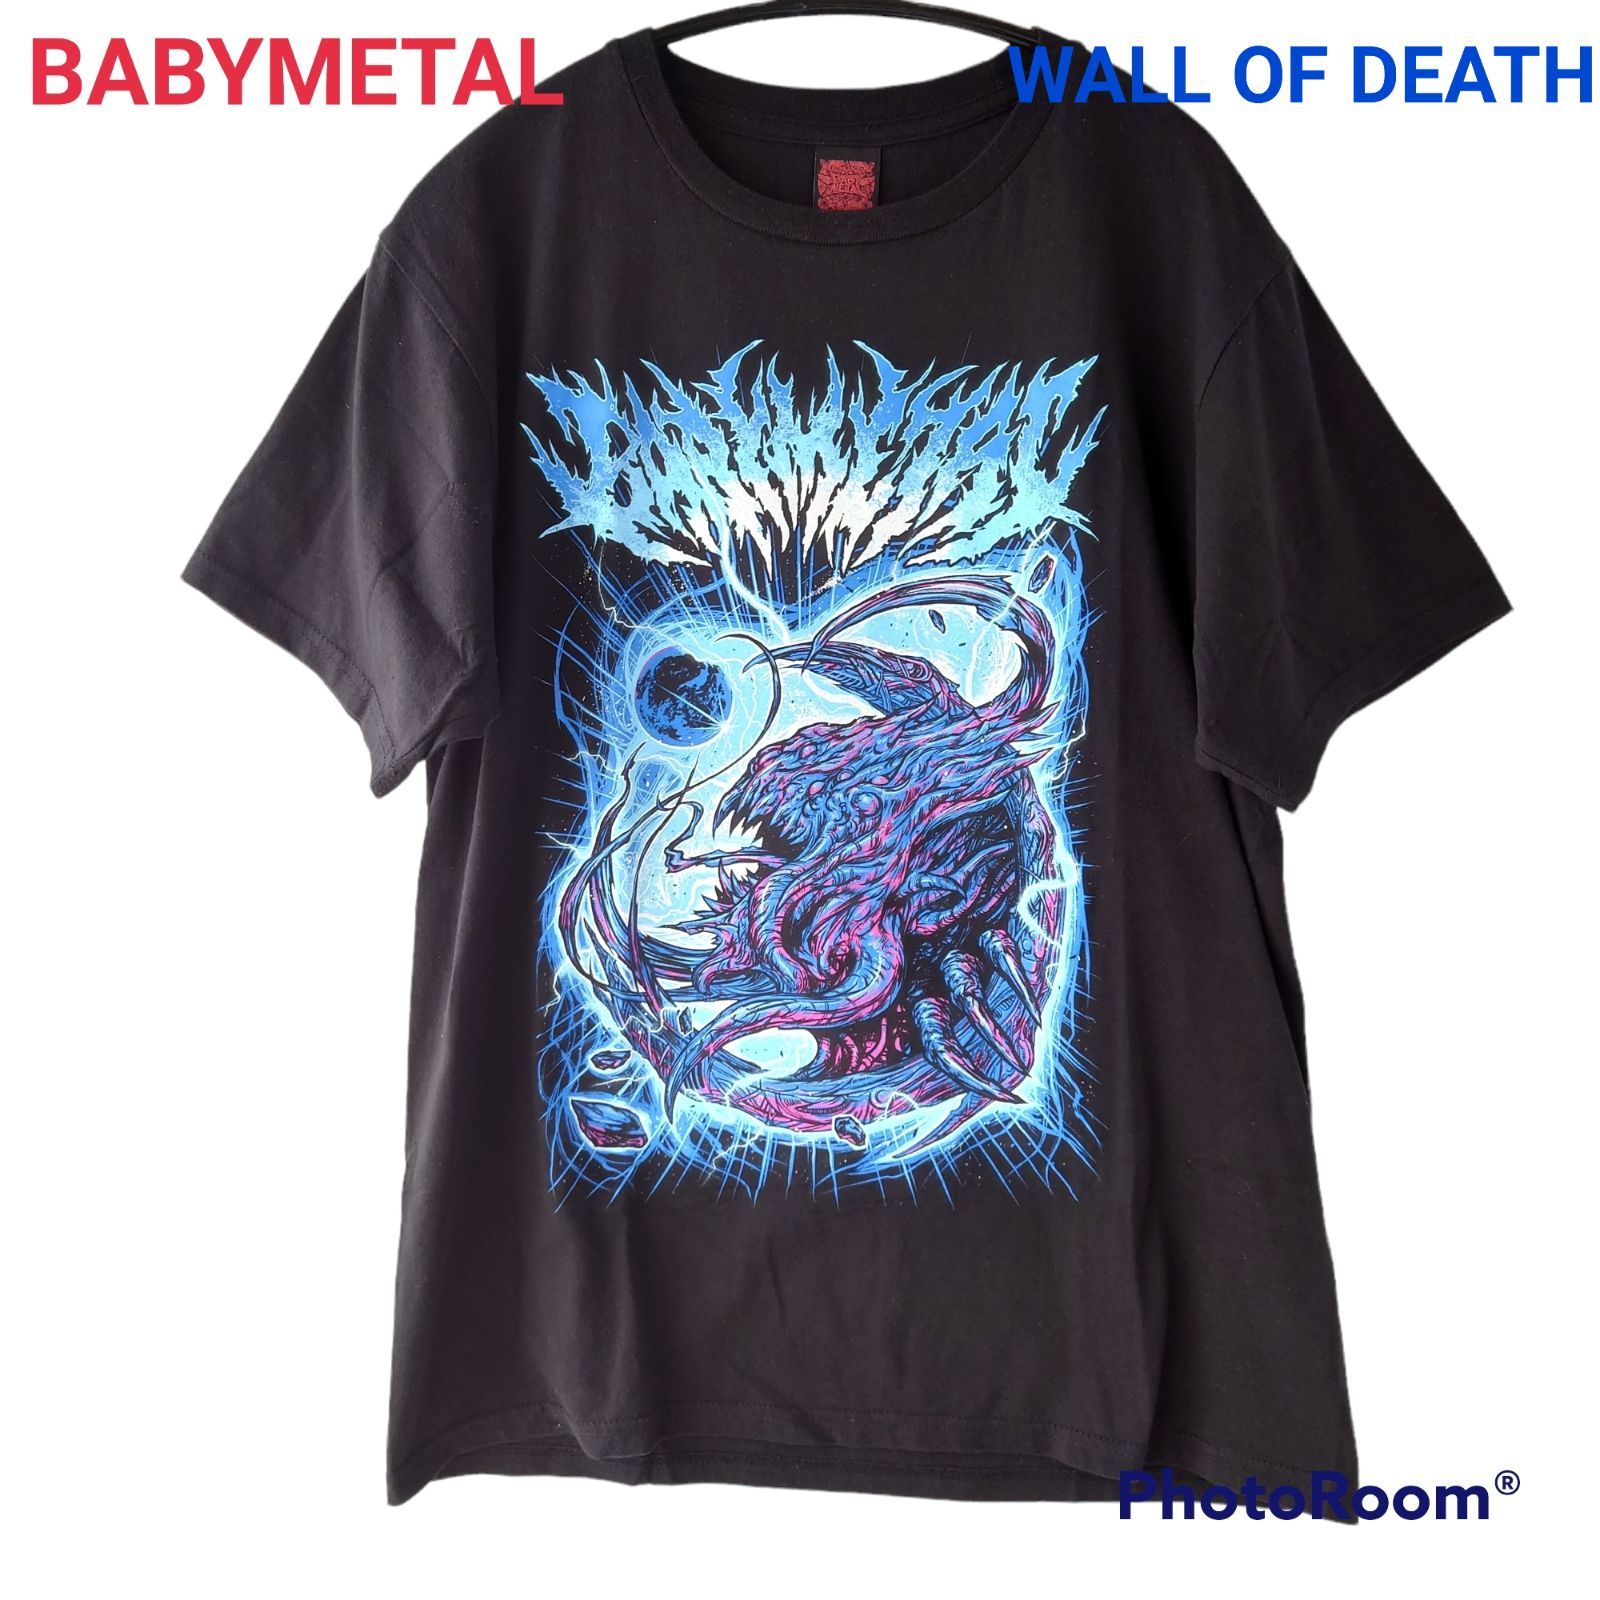 BABYMETAL】WALL OF DEATH【L-size】 - KSS-VINTAGE.com - メルカリ